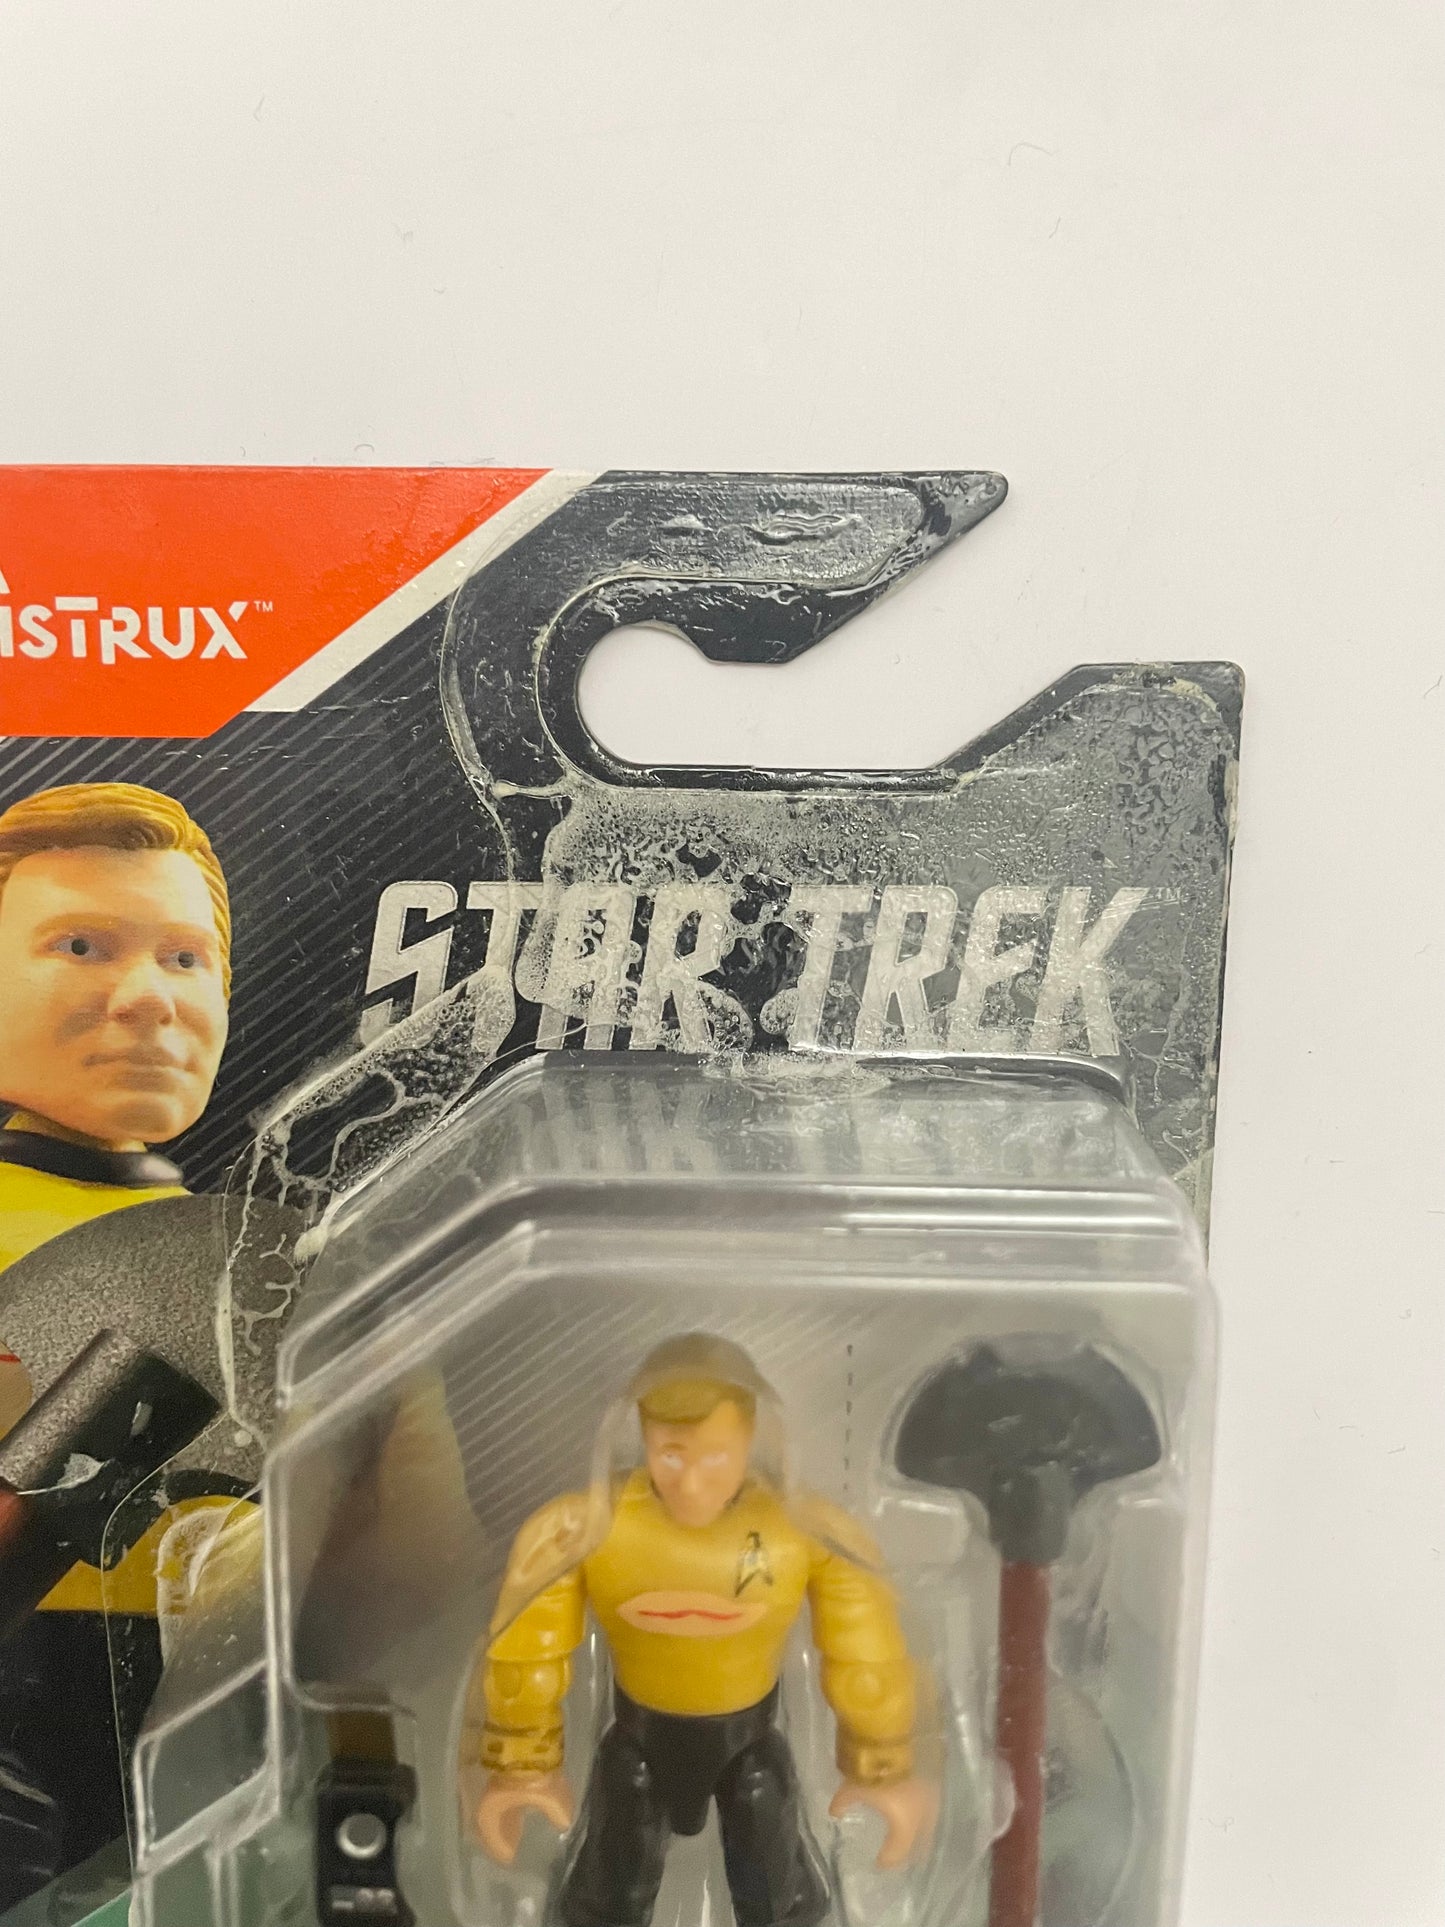 Mega Construx Star Trek Captain Kirk